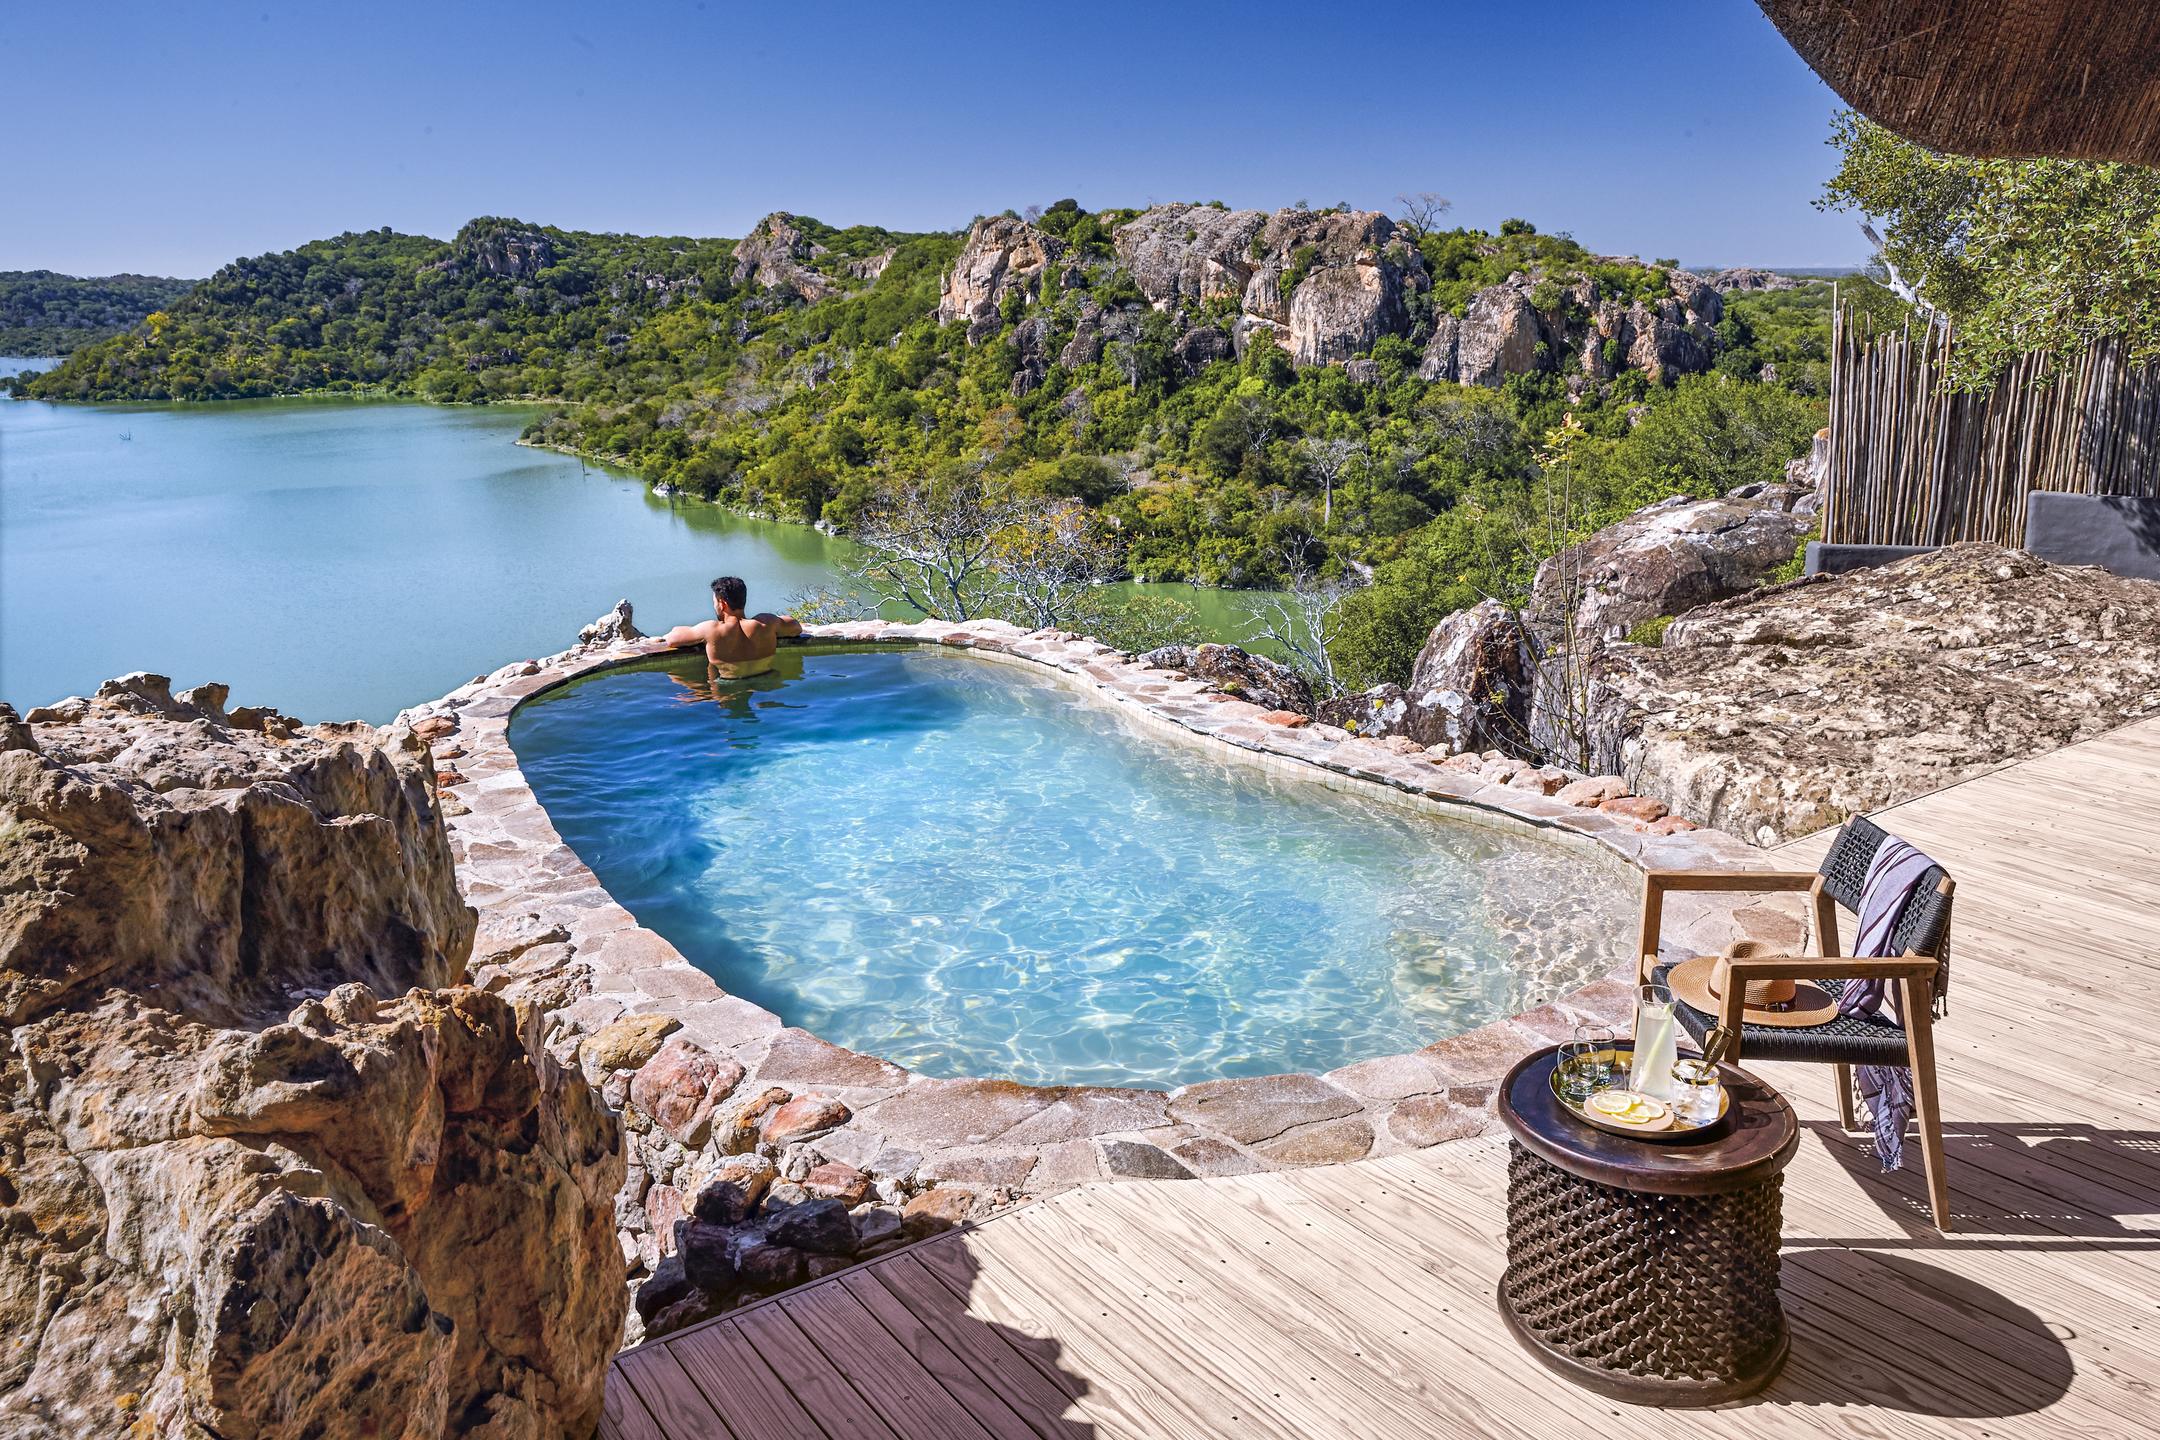 Cristal clear pool overlooking Pamushana Zimbabwe